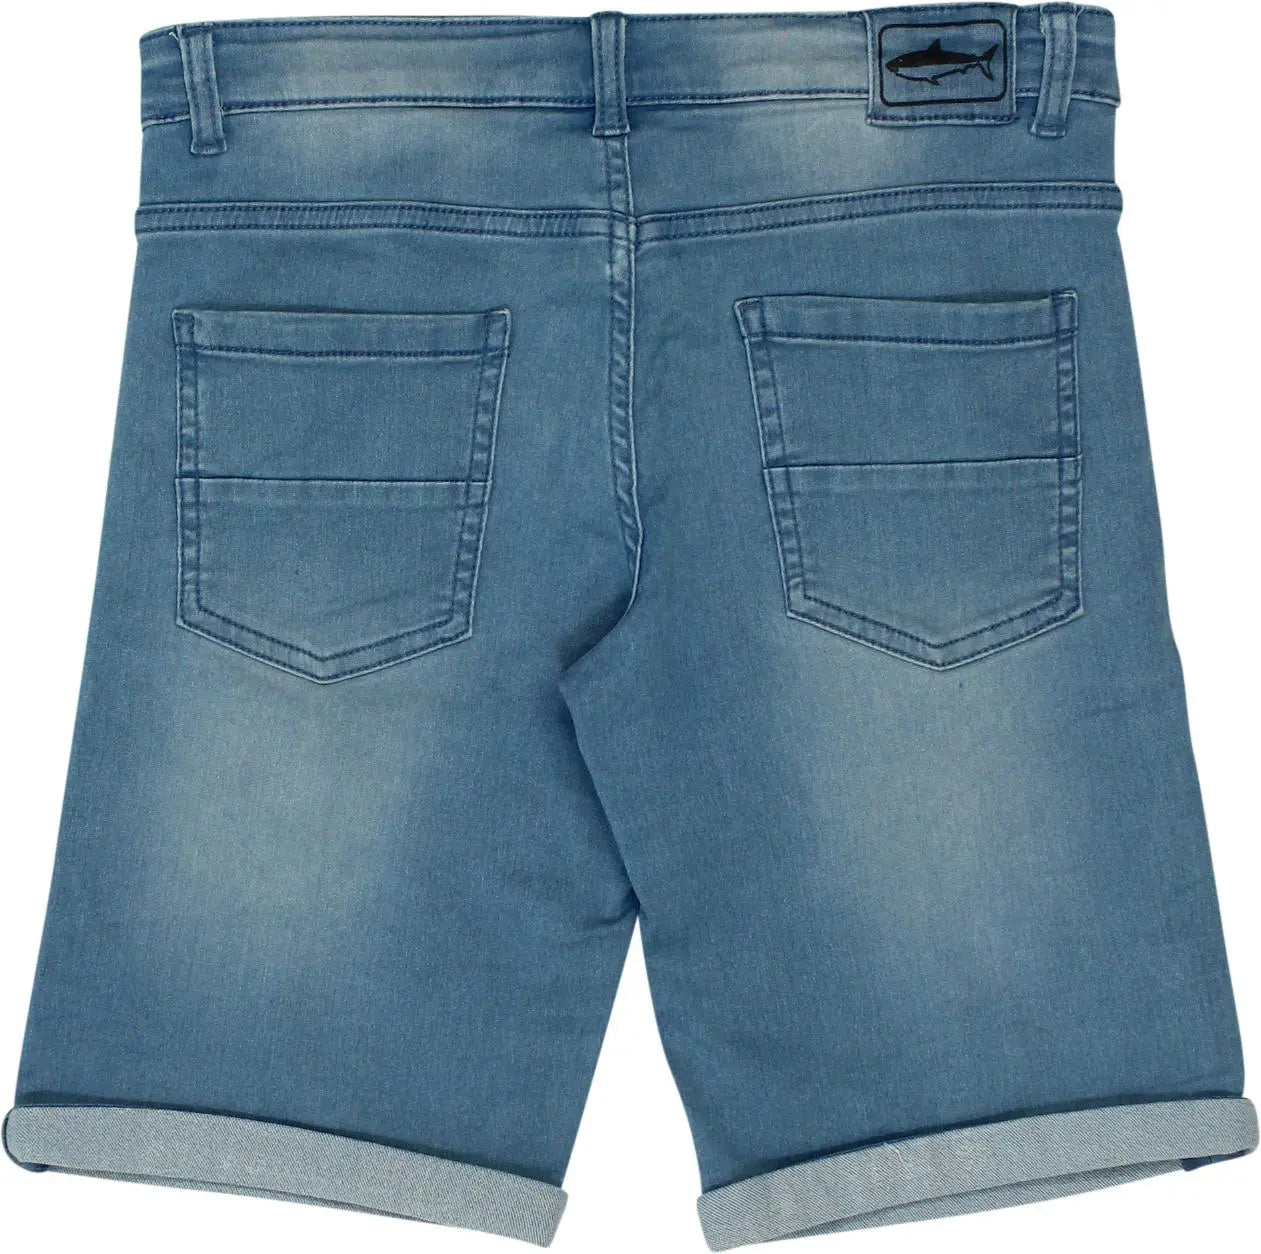 HEMA - Denim Shorts- ThriftTale.com - Vintage and second handclothing